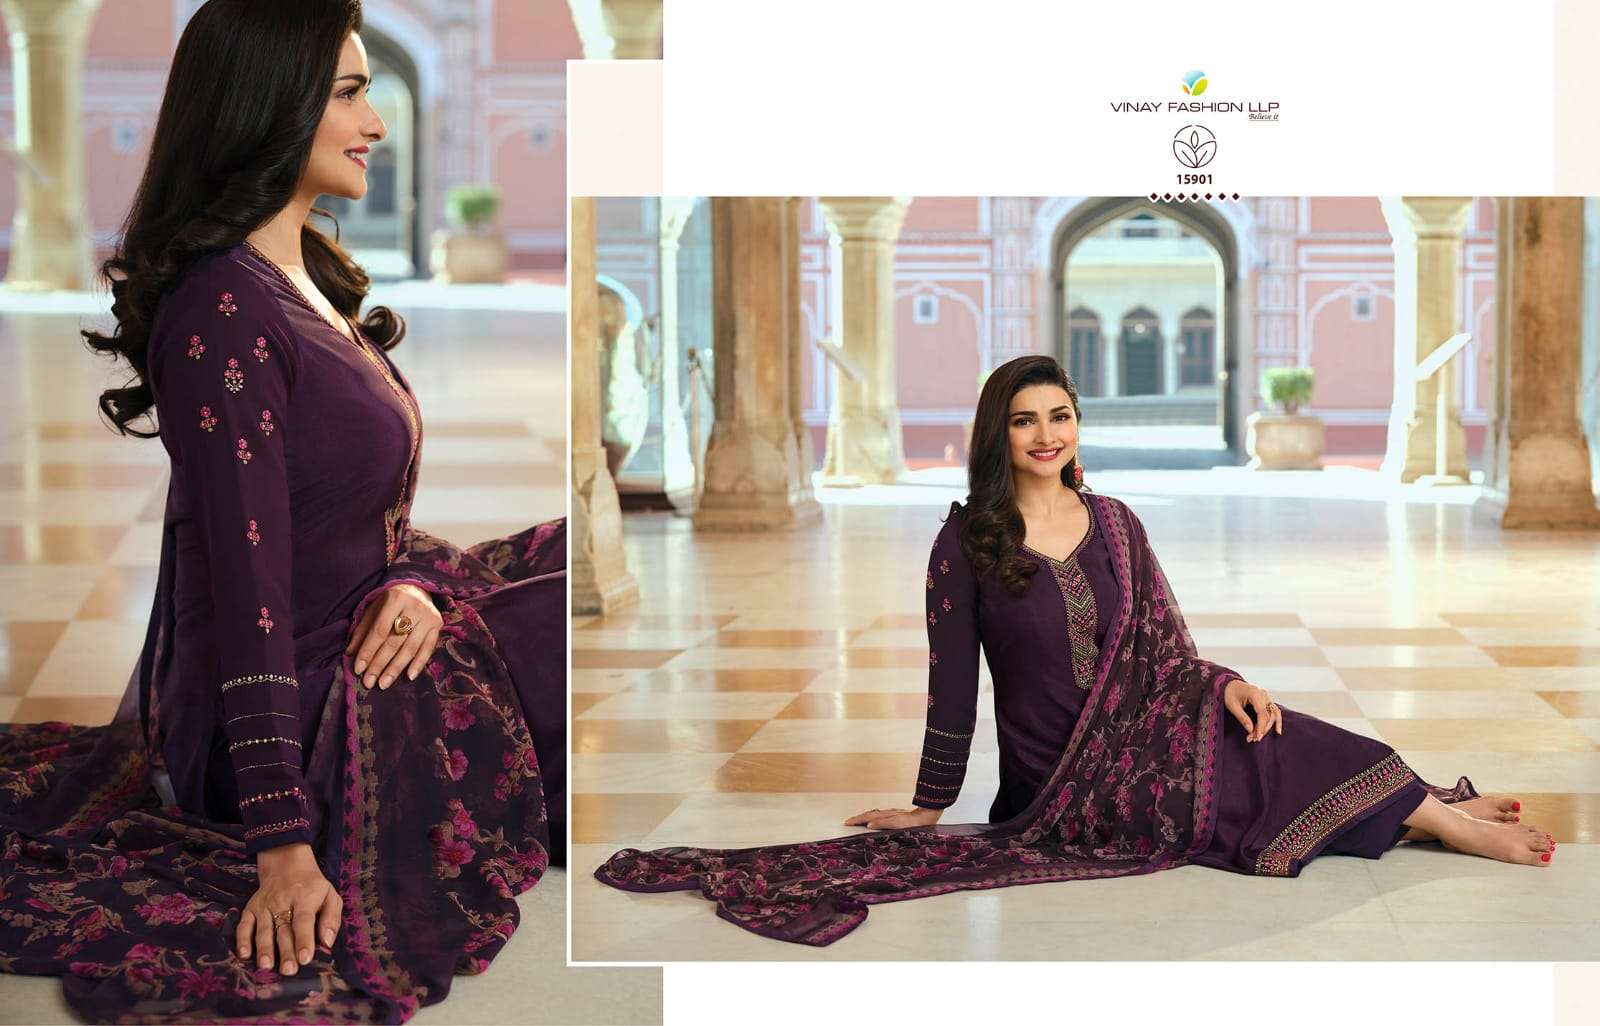 vinay fashion silkina crepe vol-35 15901-15908 series exclusive designer salwar suits online purchasing surat 